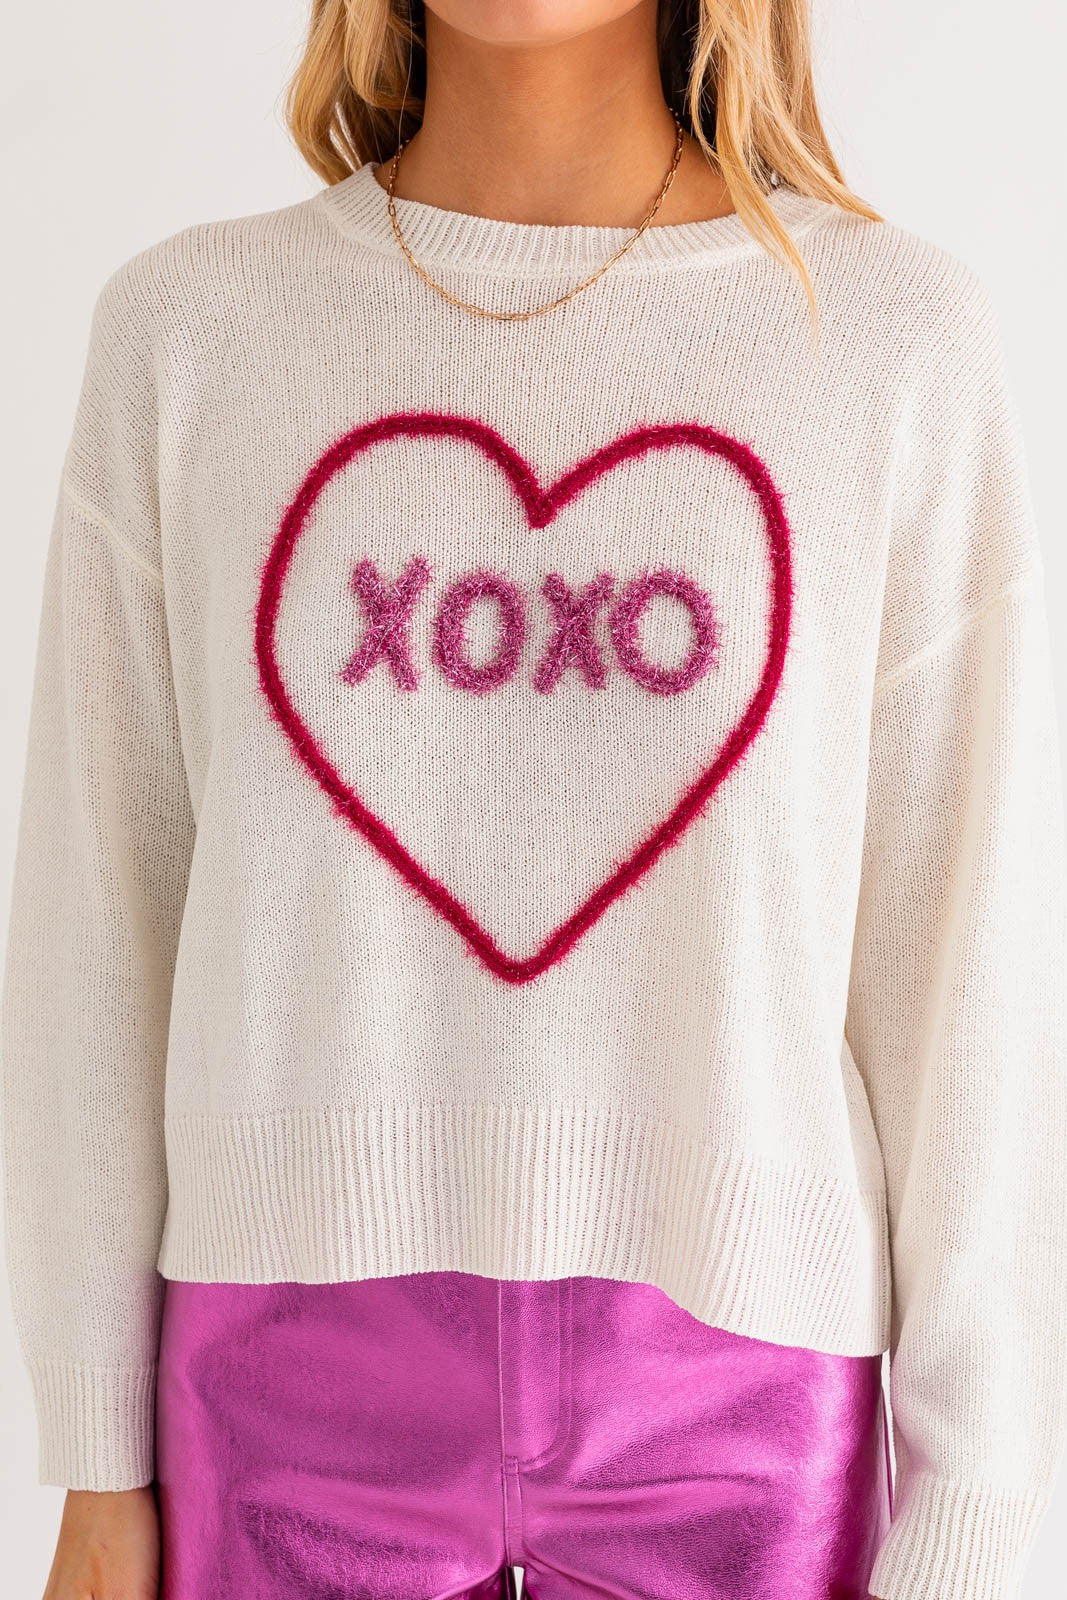 XOXO Pullover Lightweight Sweater